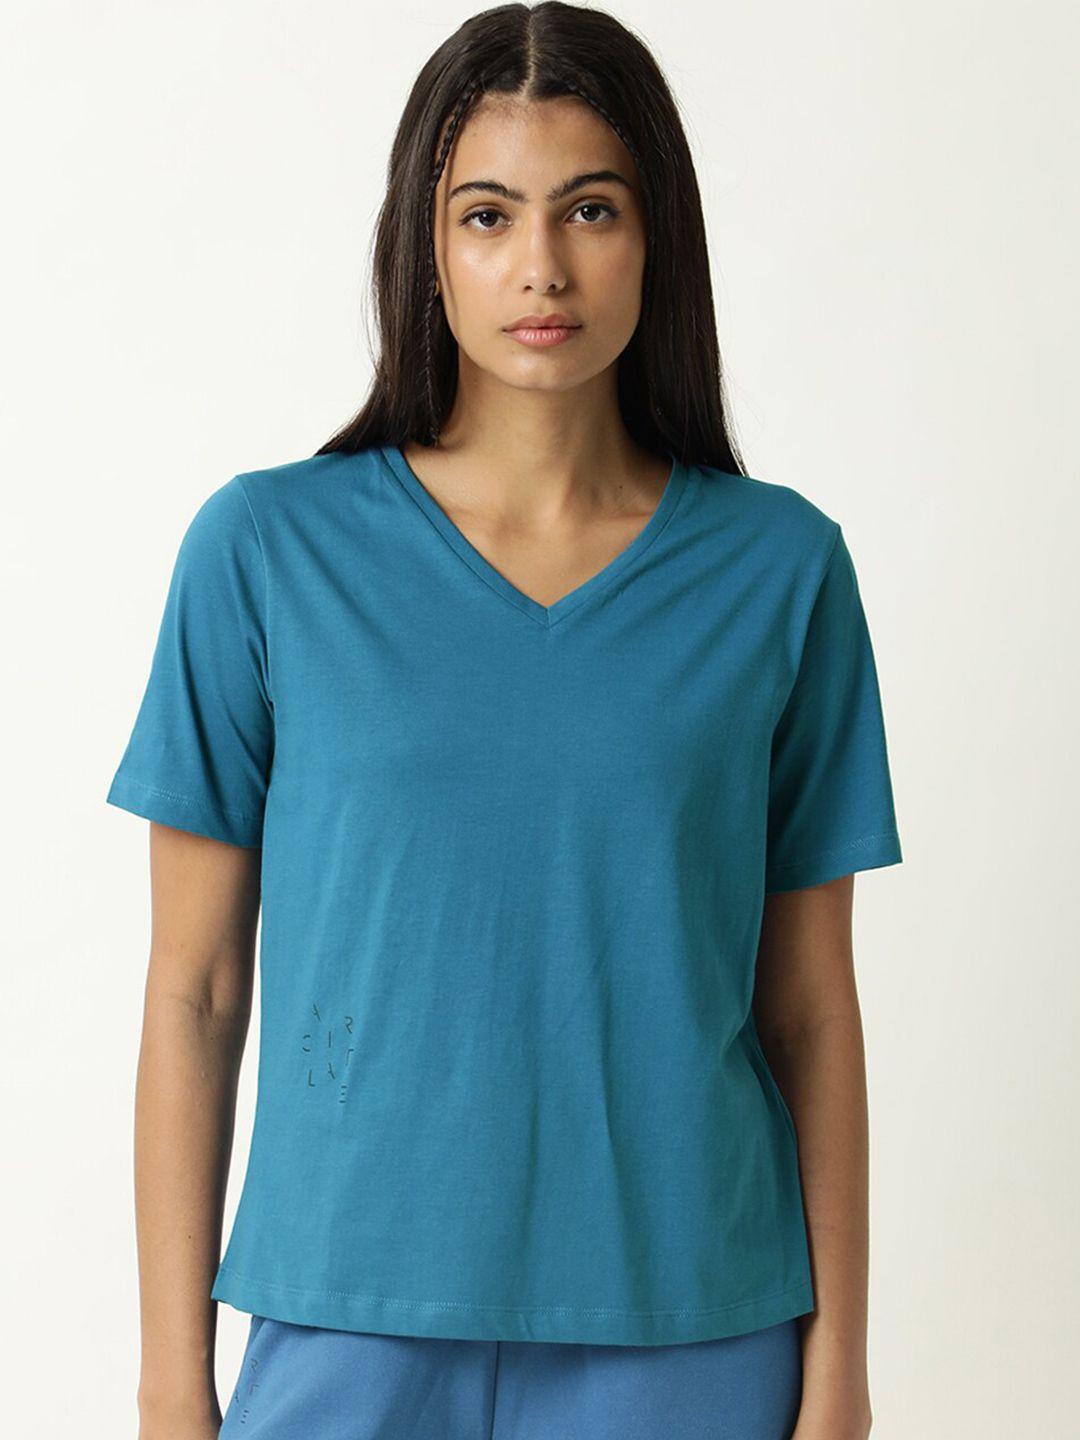 articale women teal solid v-neck slim fit cotton t-shirt